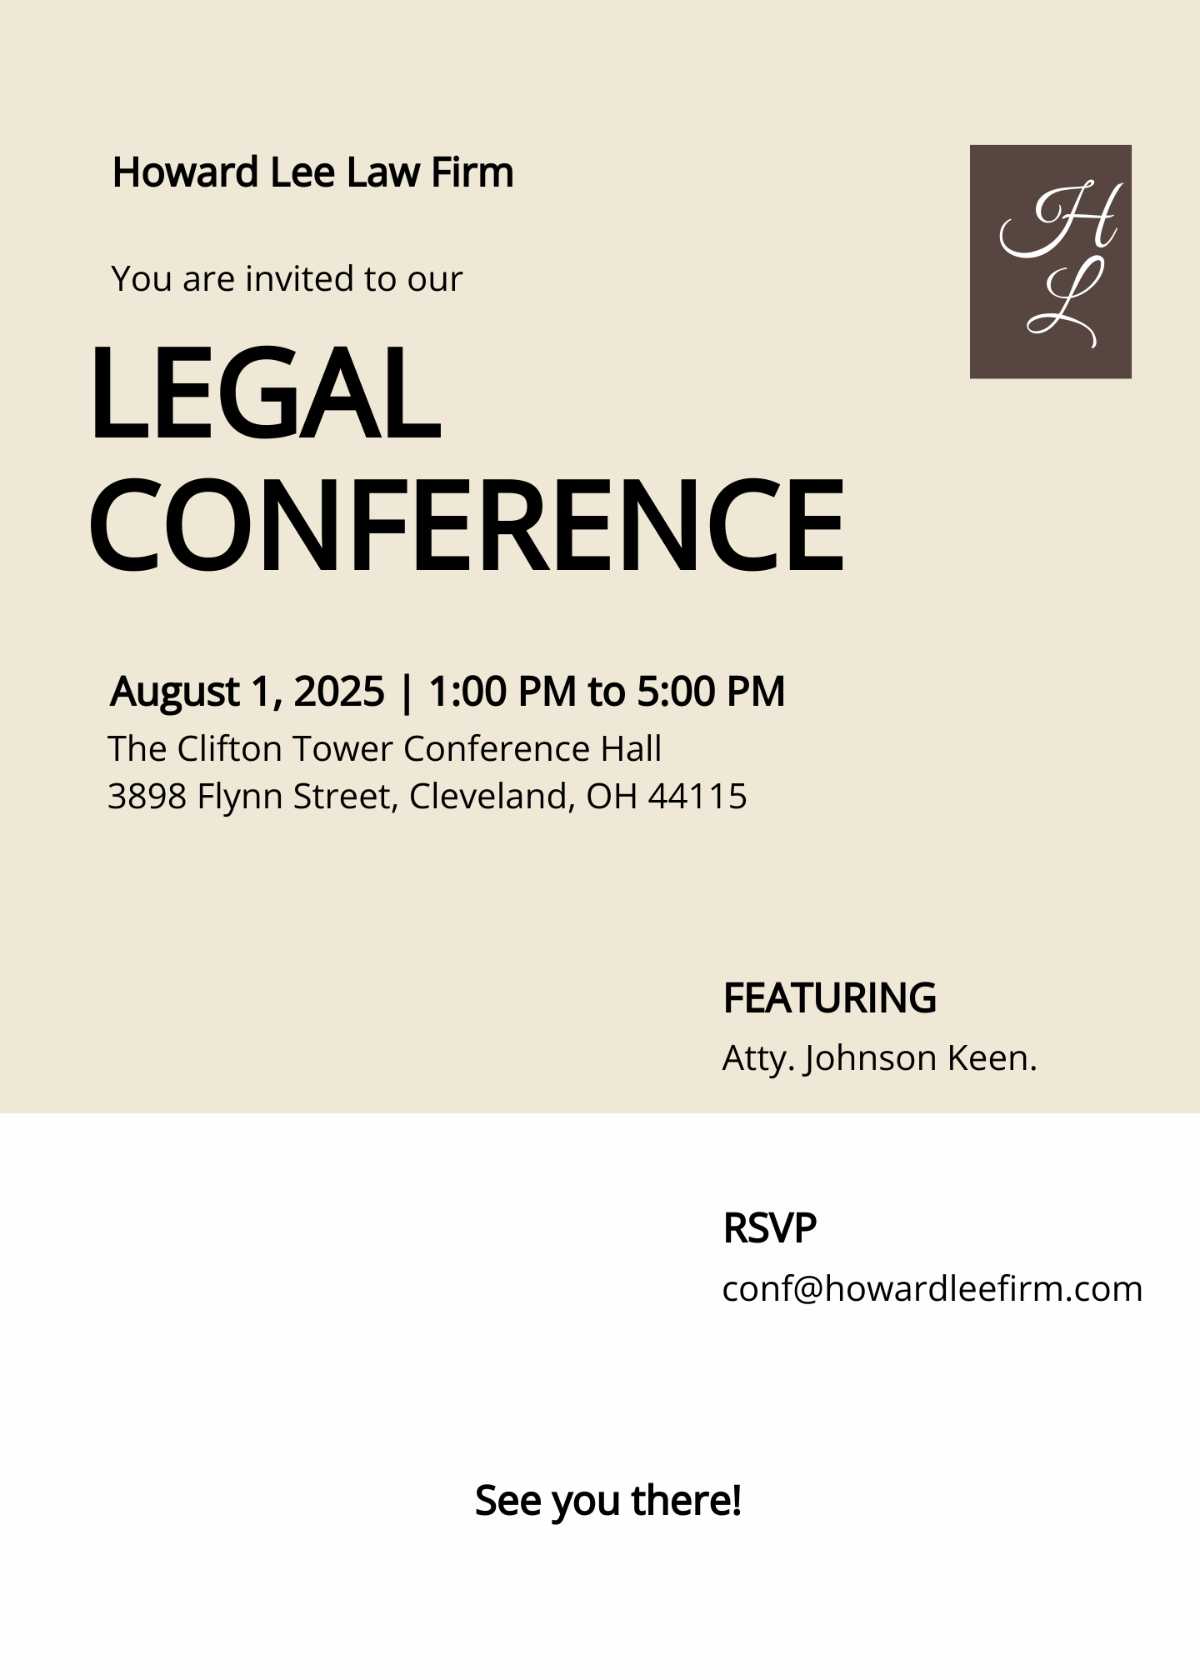 Legal Conference Invitation Template